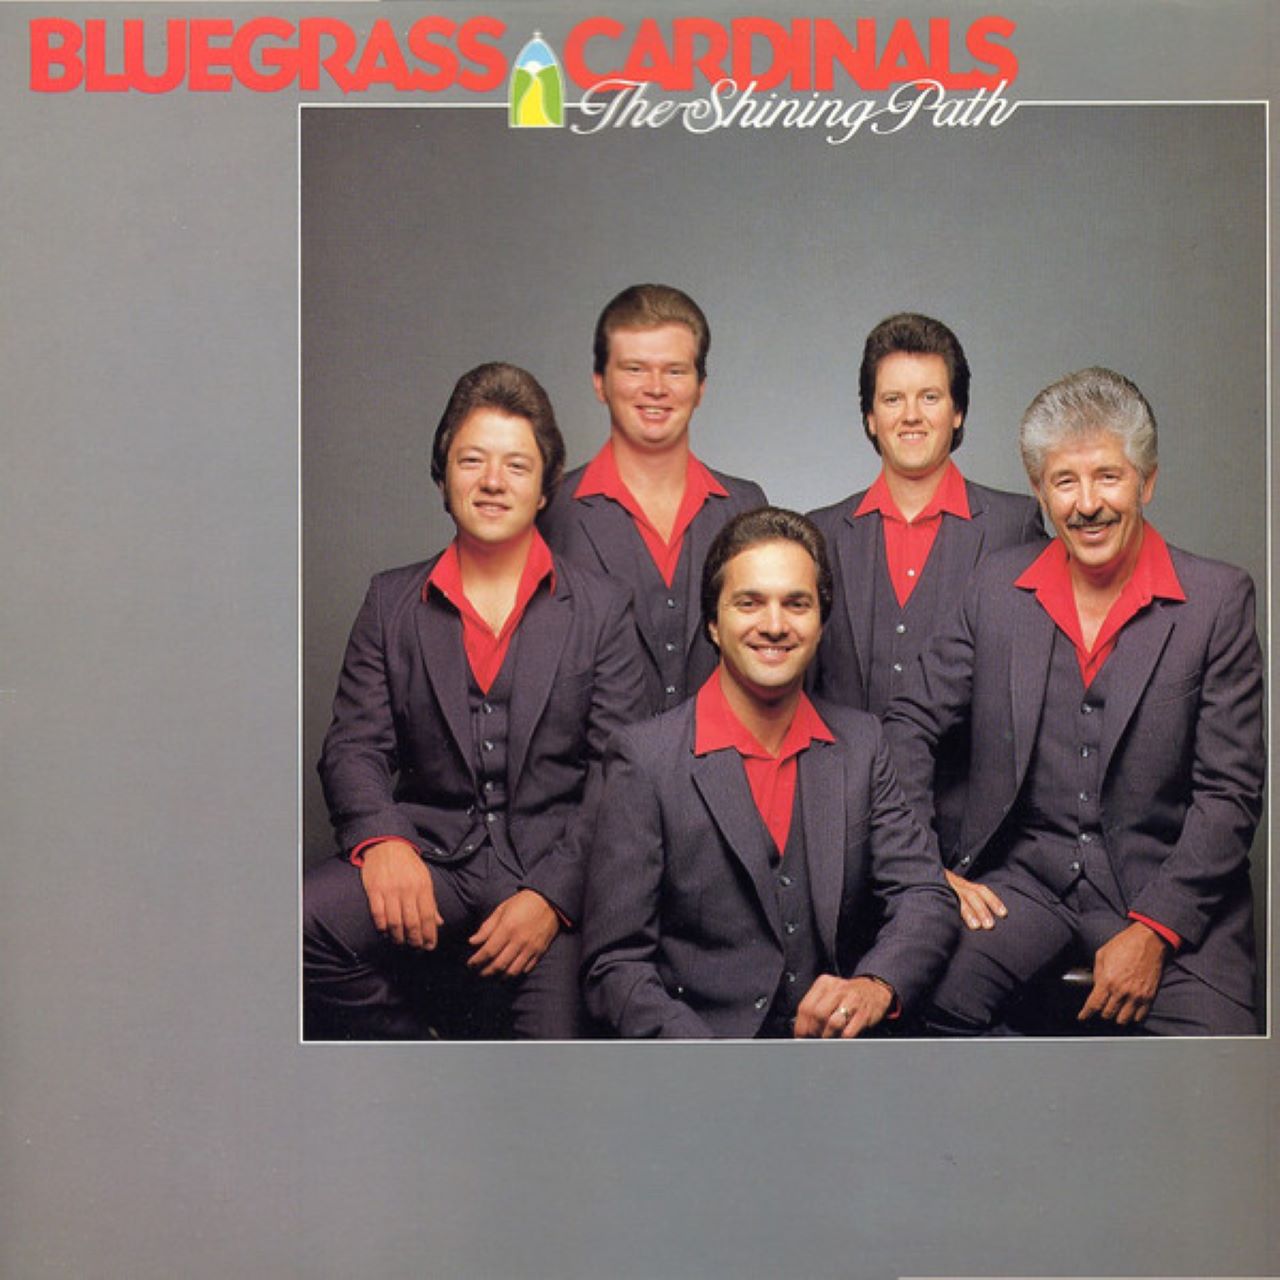 Bluegrass Cardinals - The Shining Path cover album